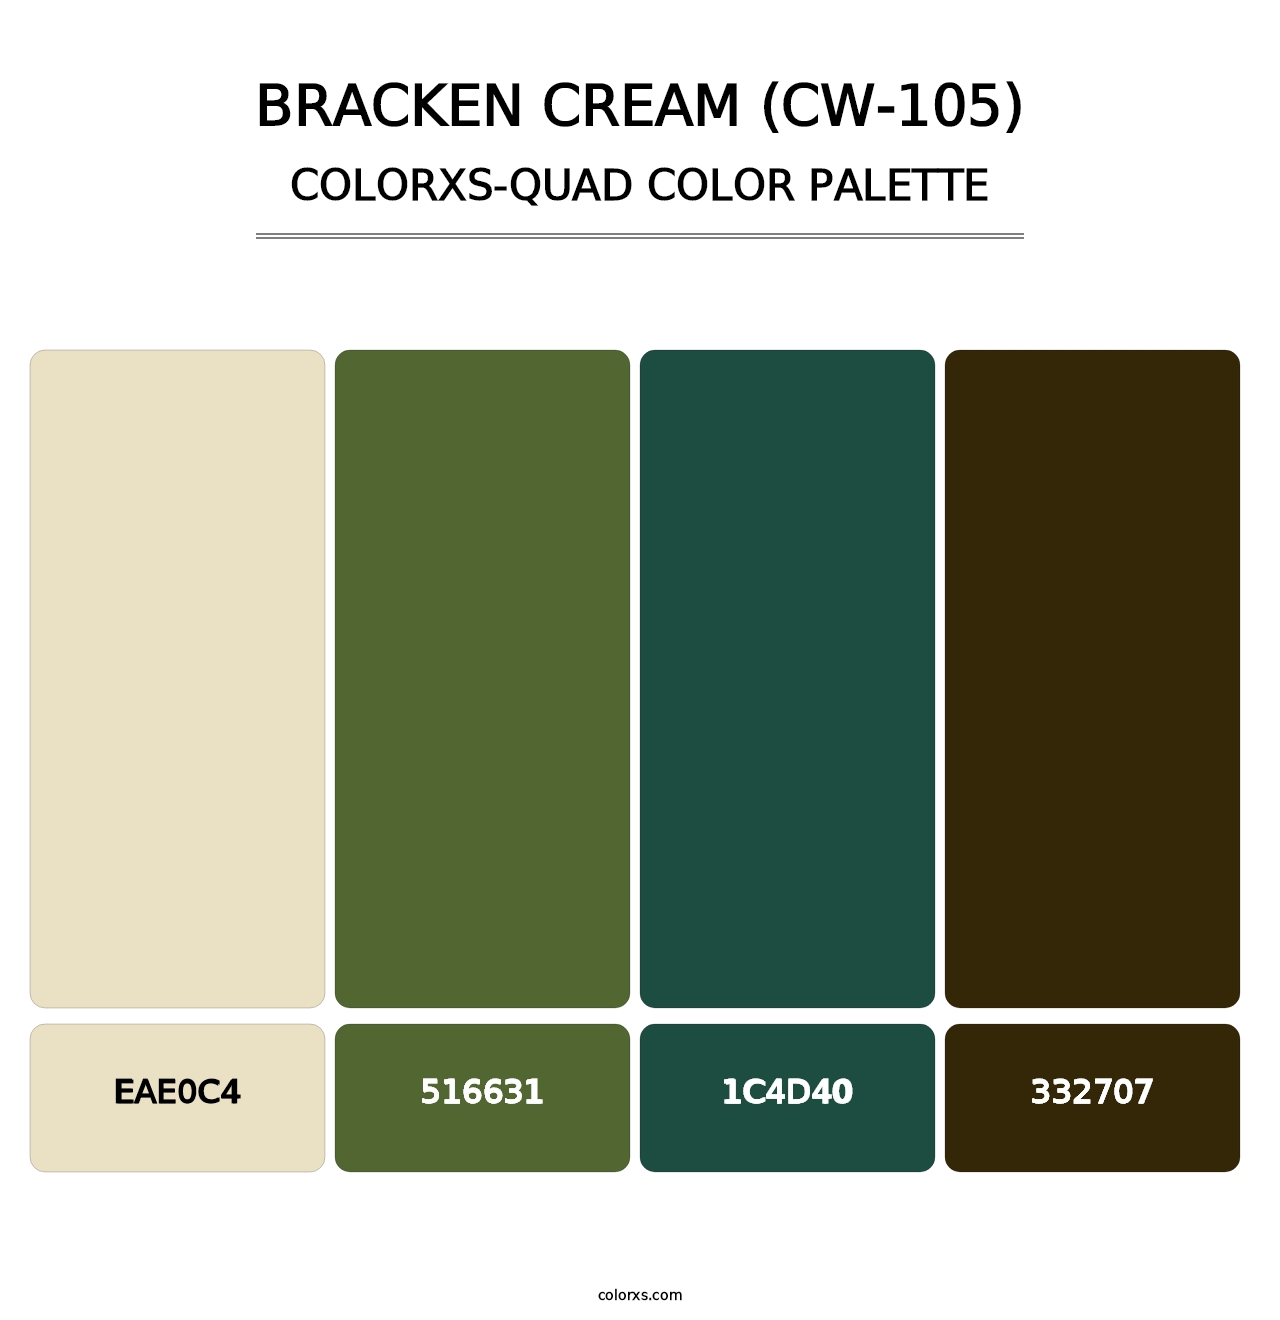 Bracken Cream (CW-105) - Colorxs Quad Palette